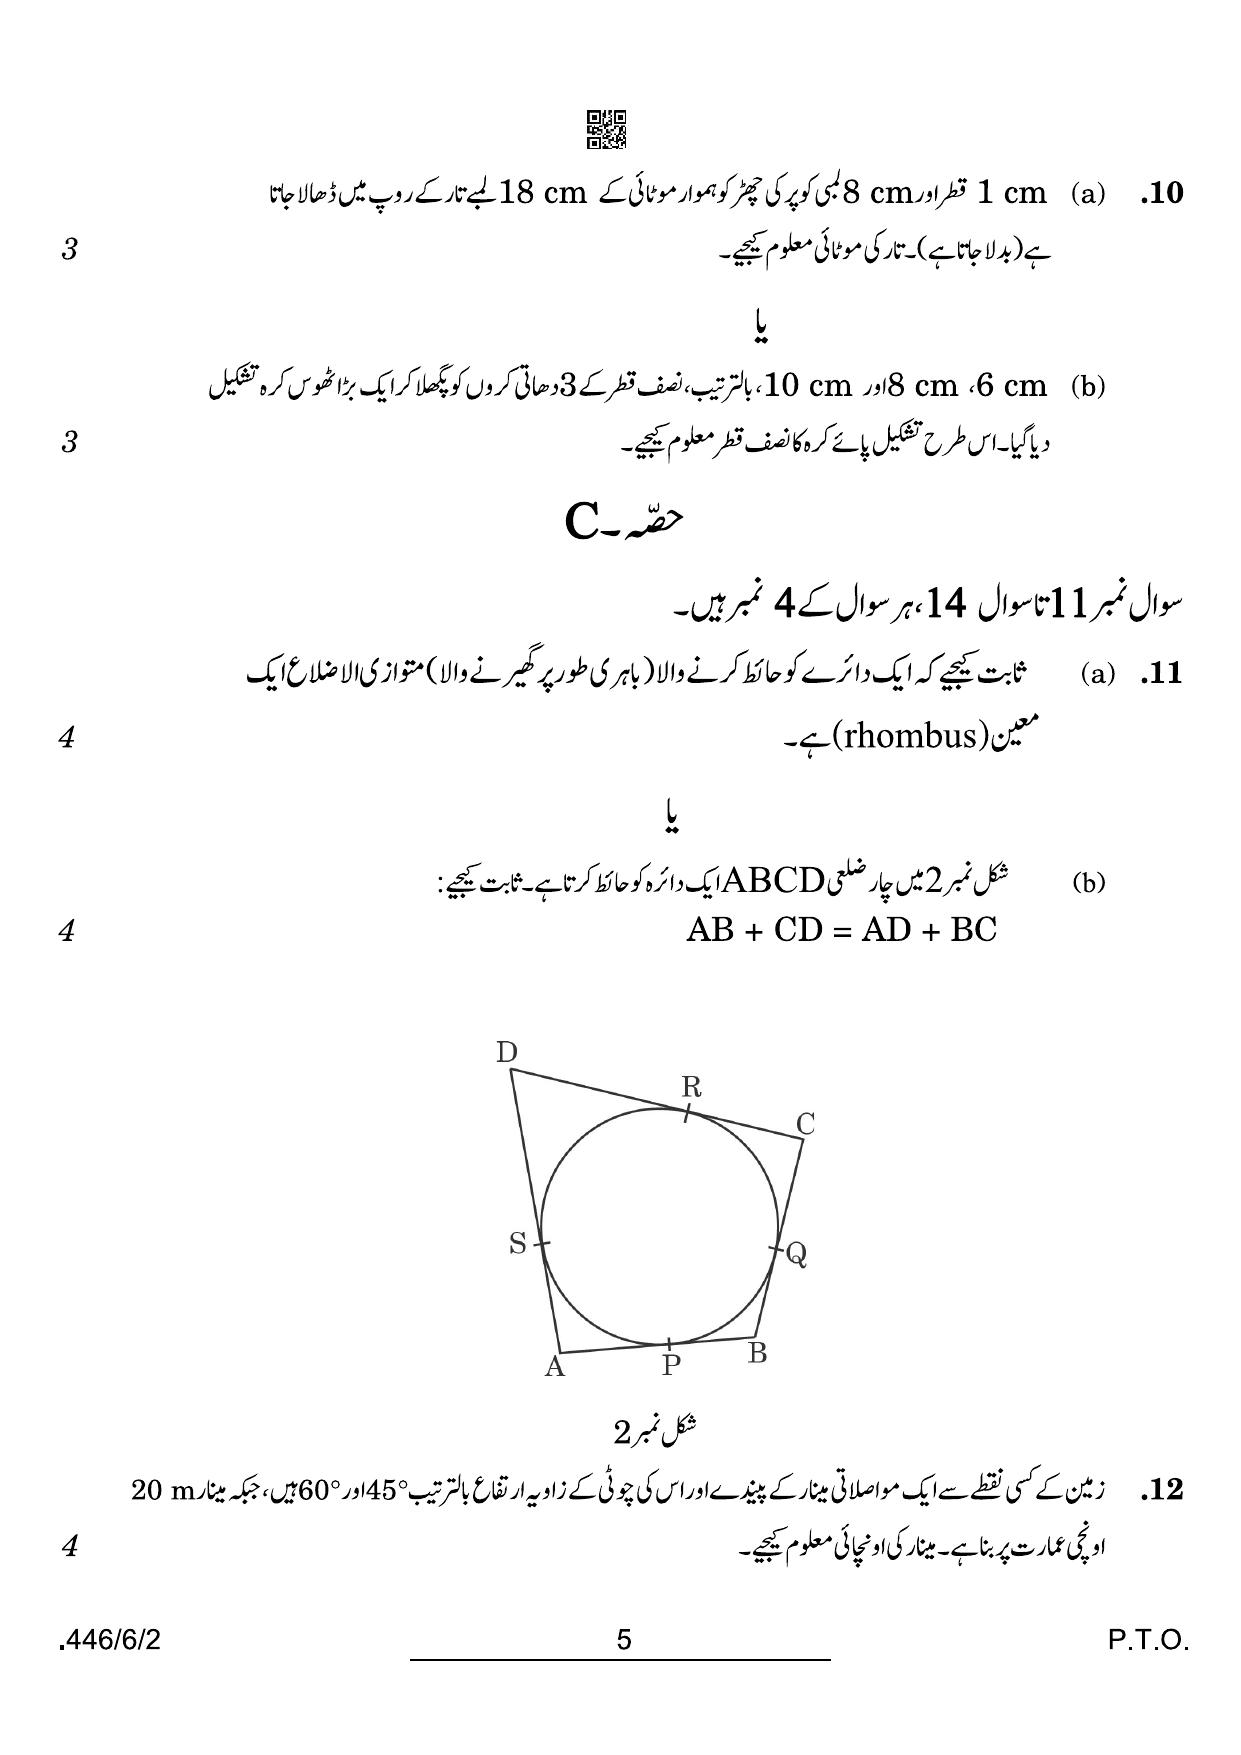 CBSE Class 10 446-6-2 Maths Basic Urdu 2022 Compartment Question Paper - Page 5